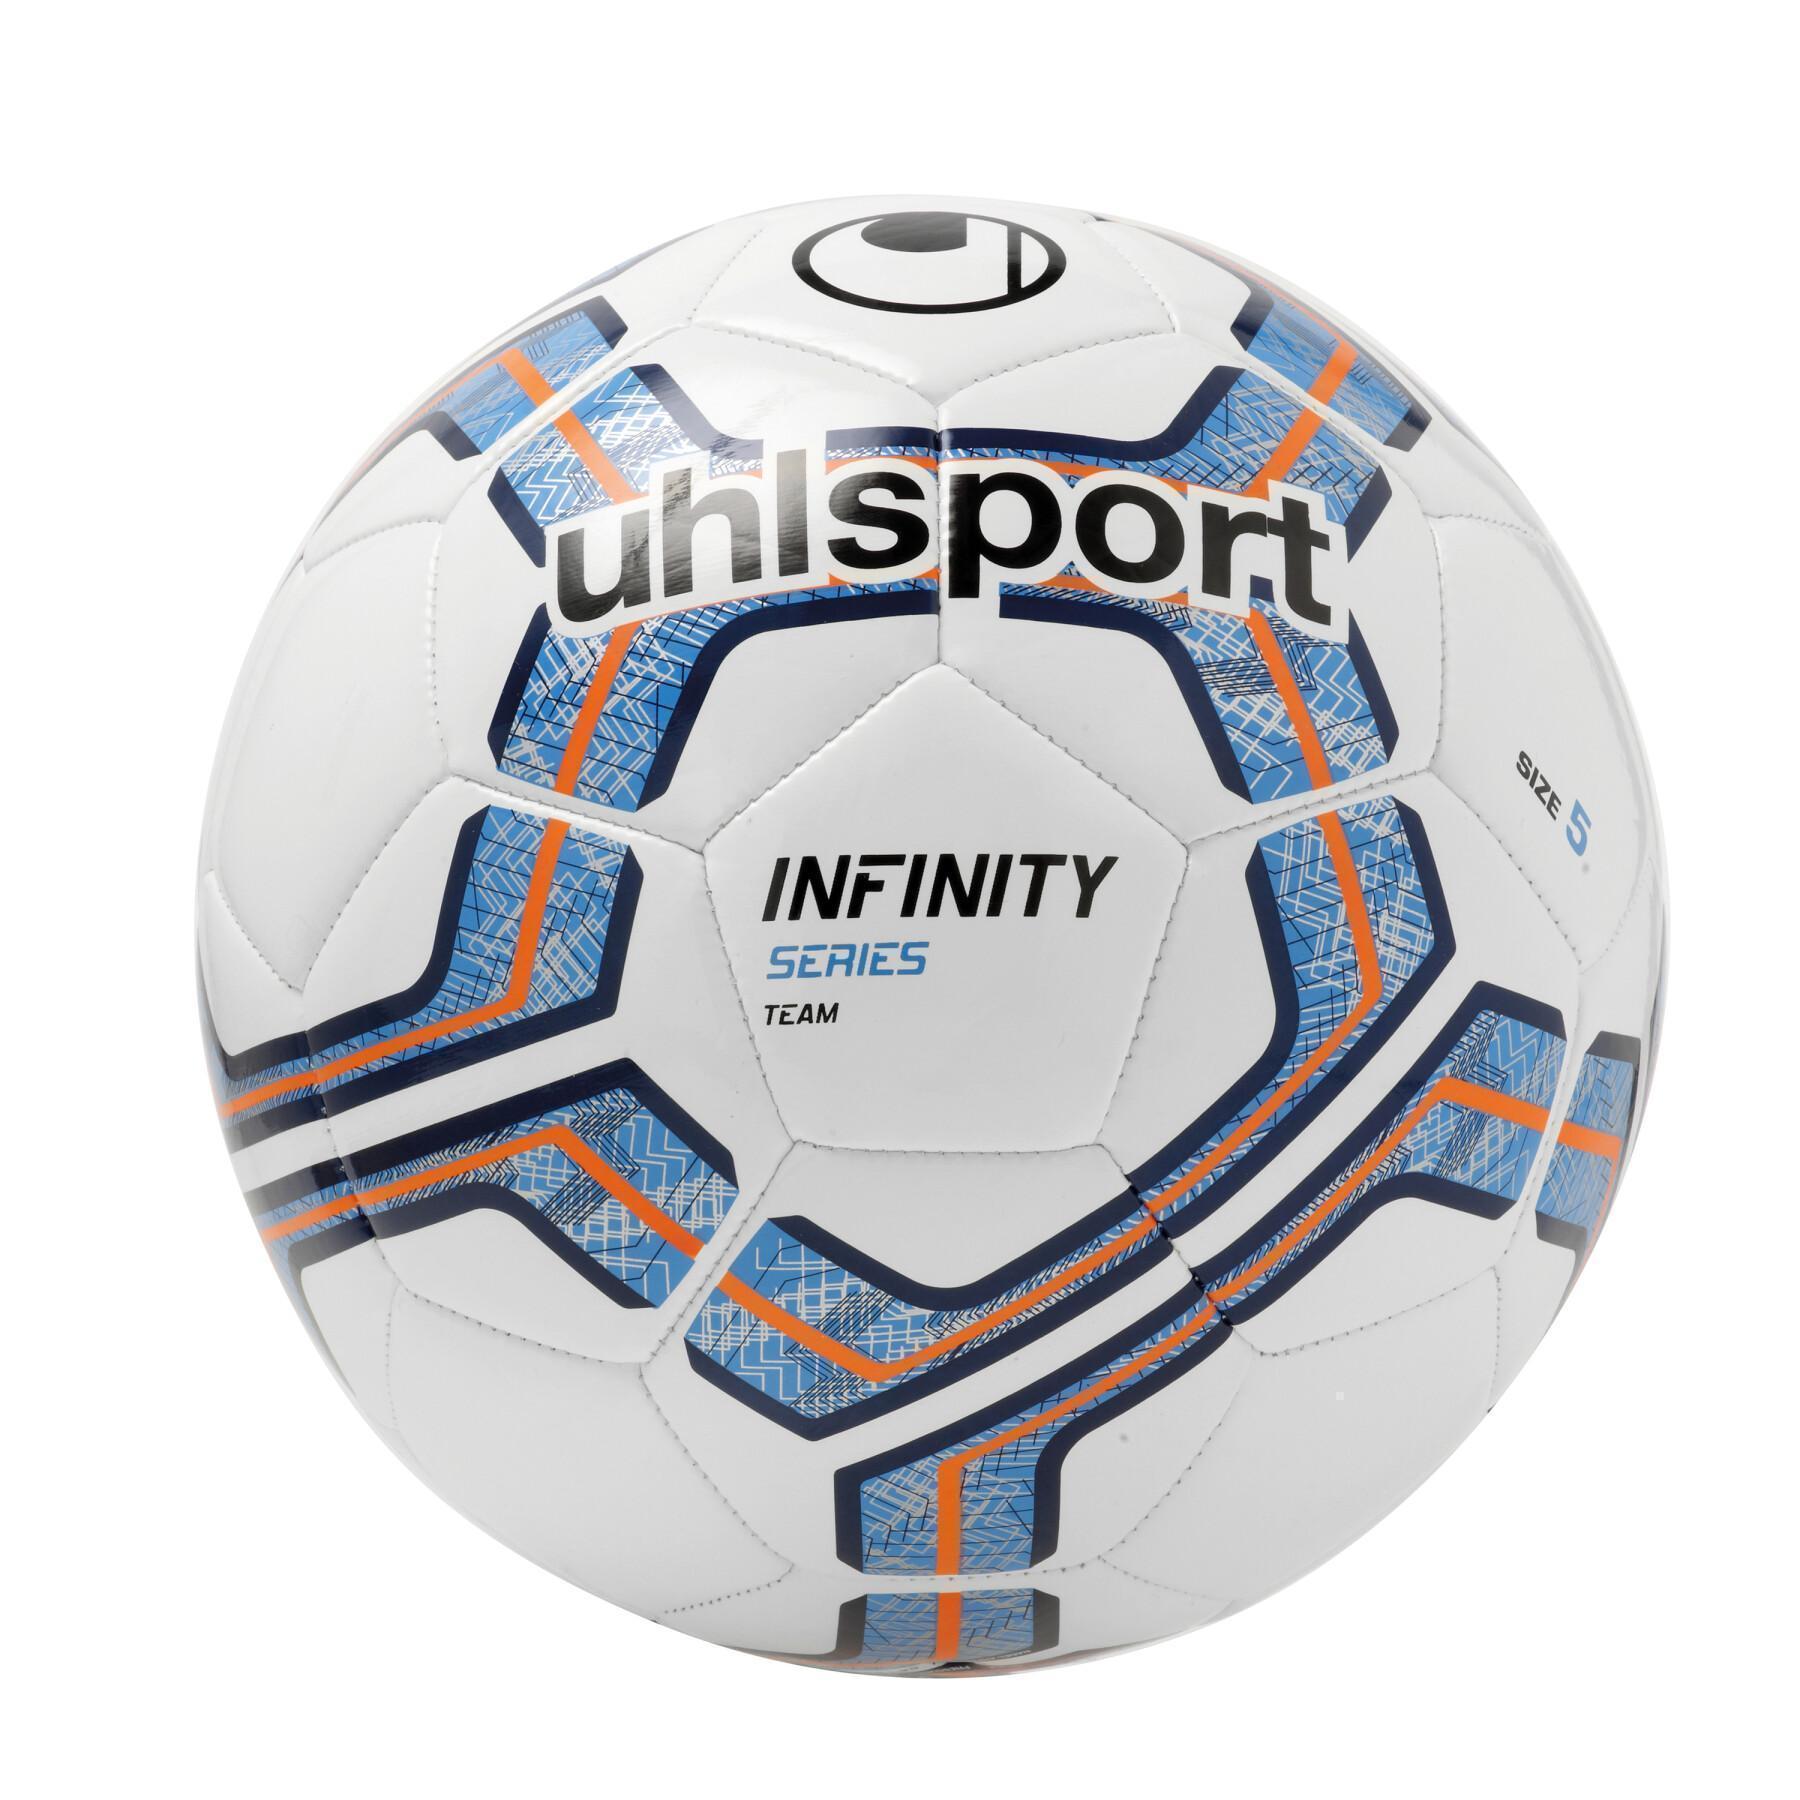 Balon Uhlsport Infinity Team